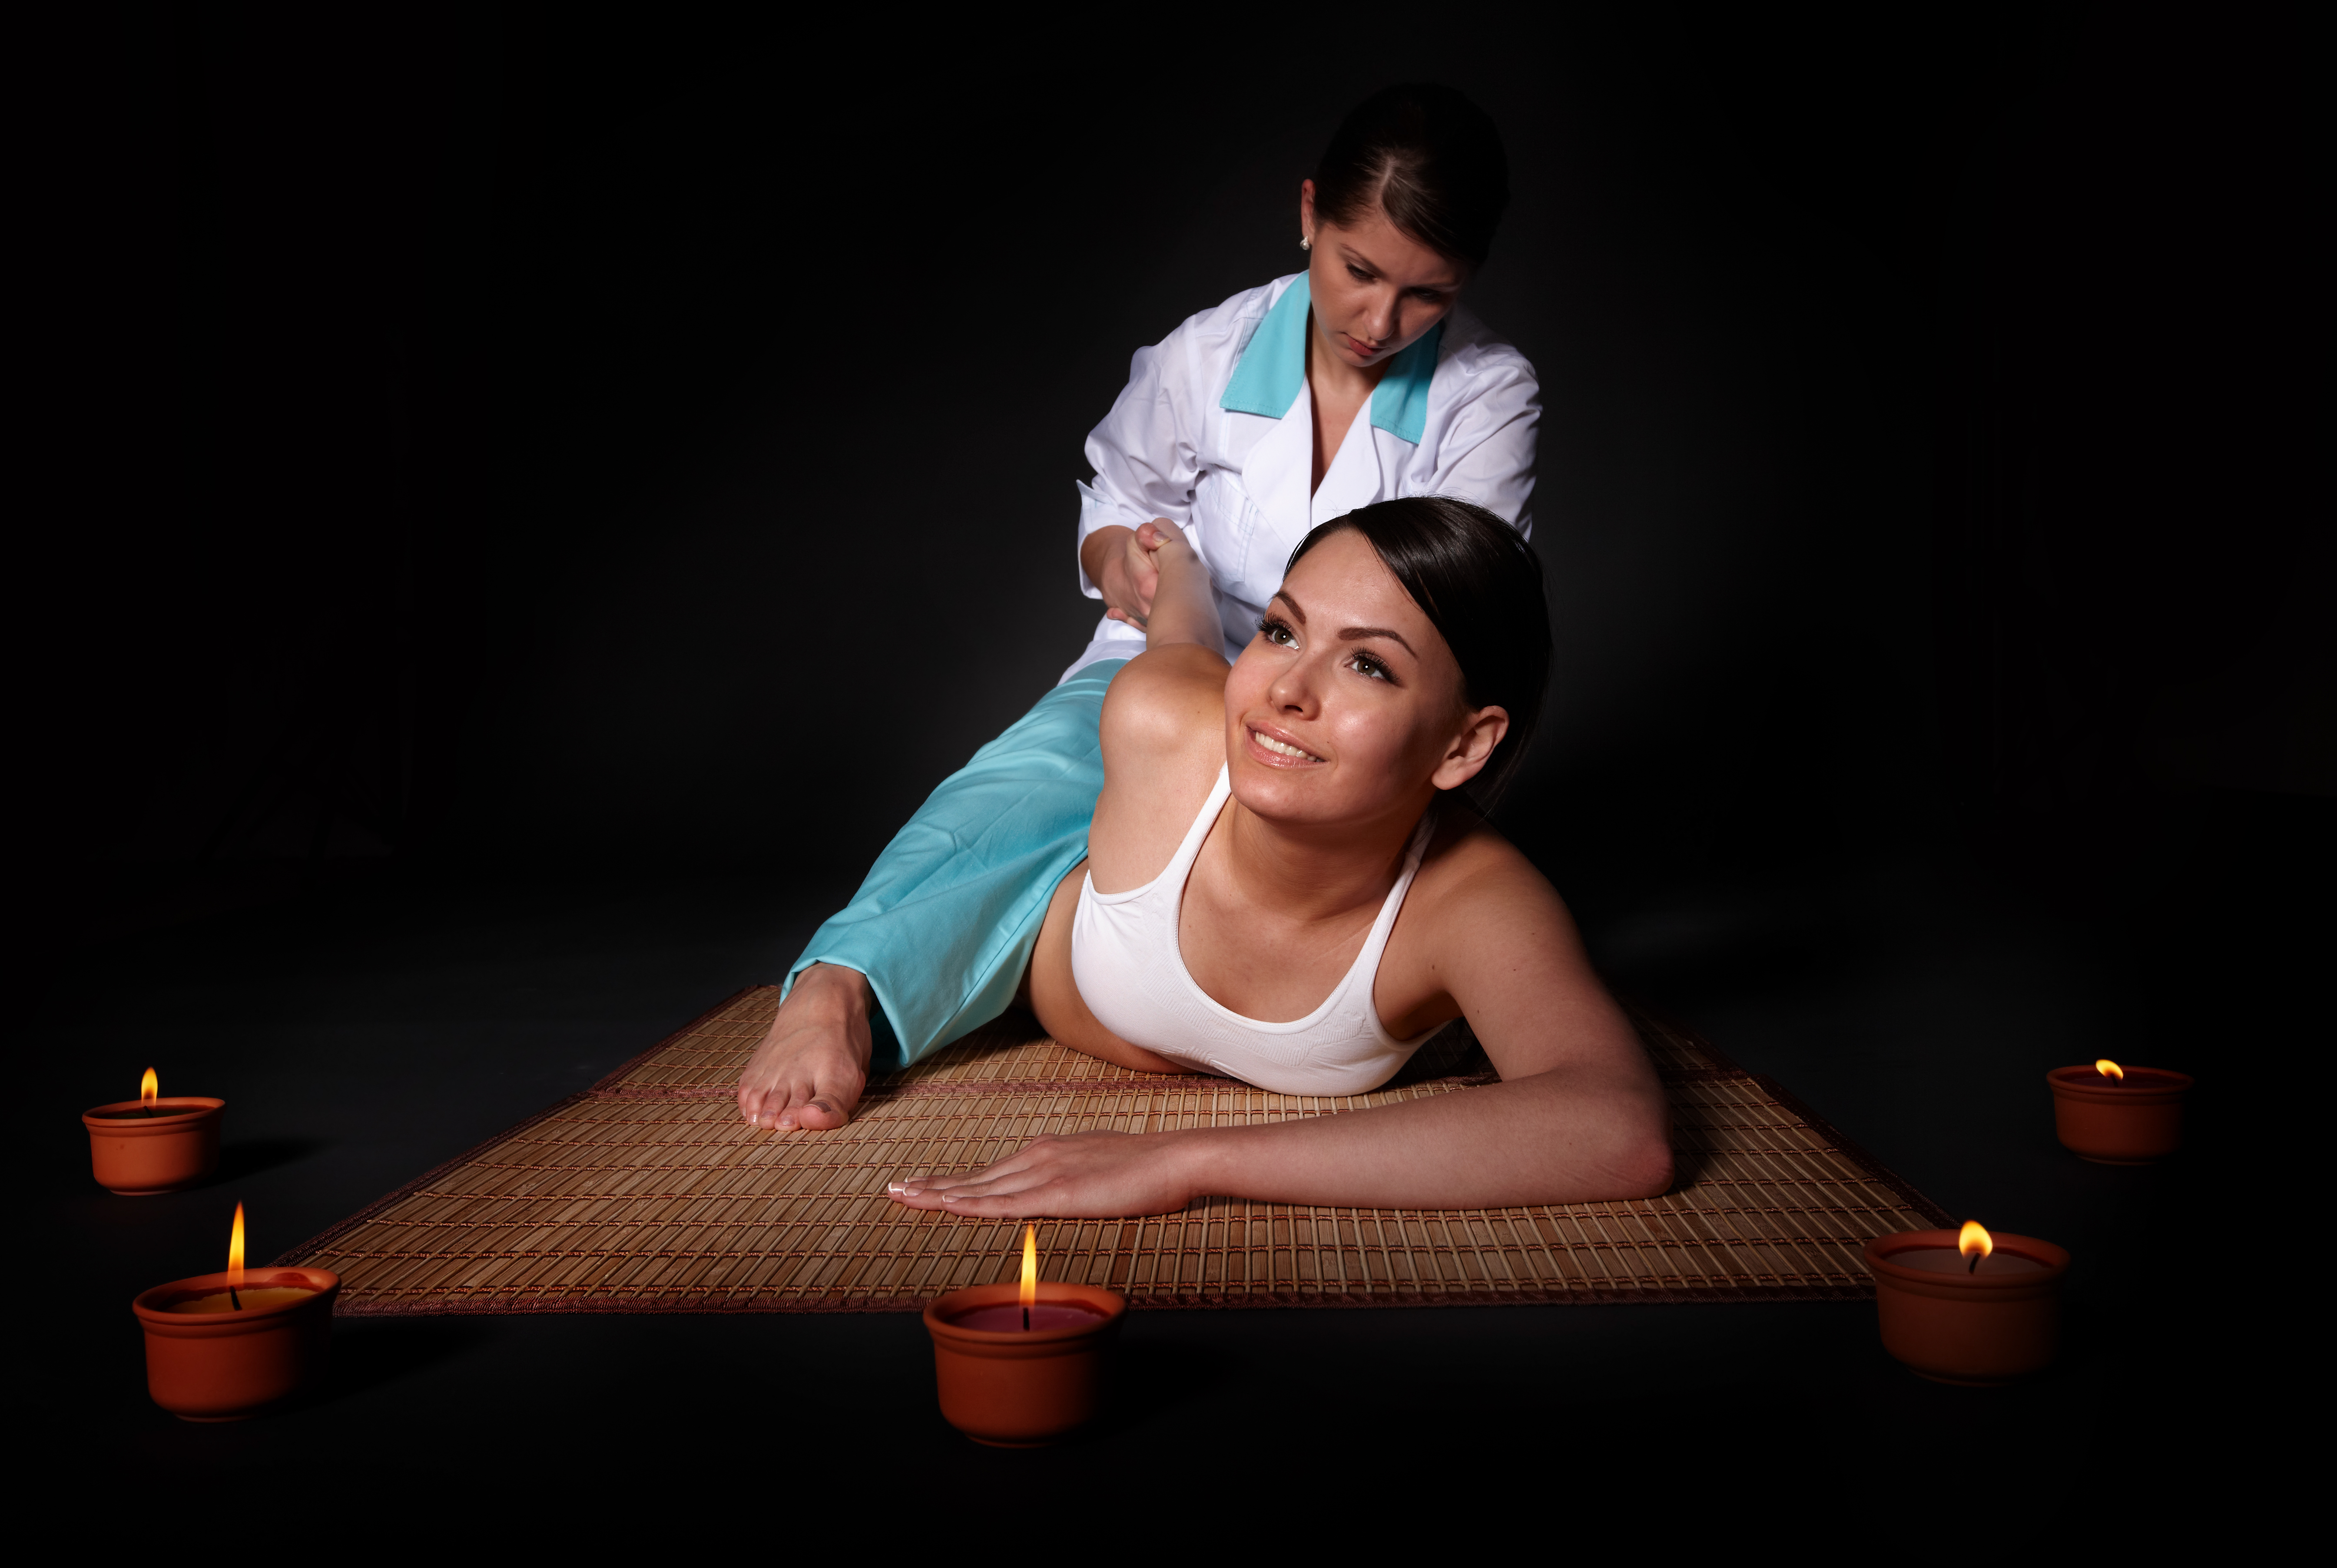 Thai Massage Girl